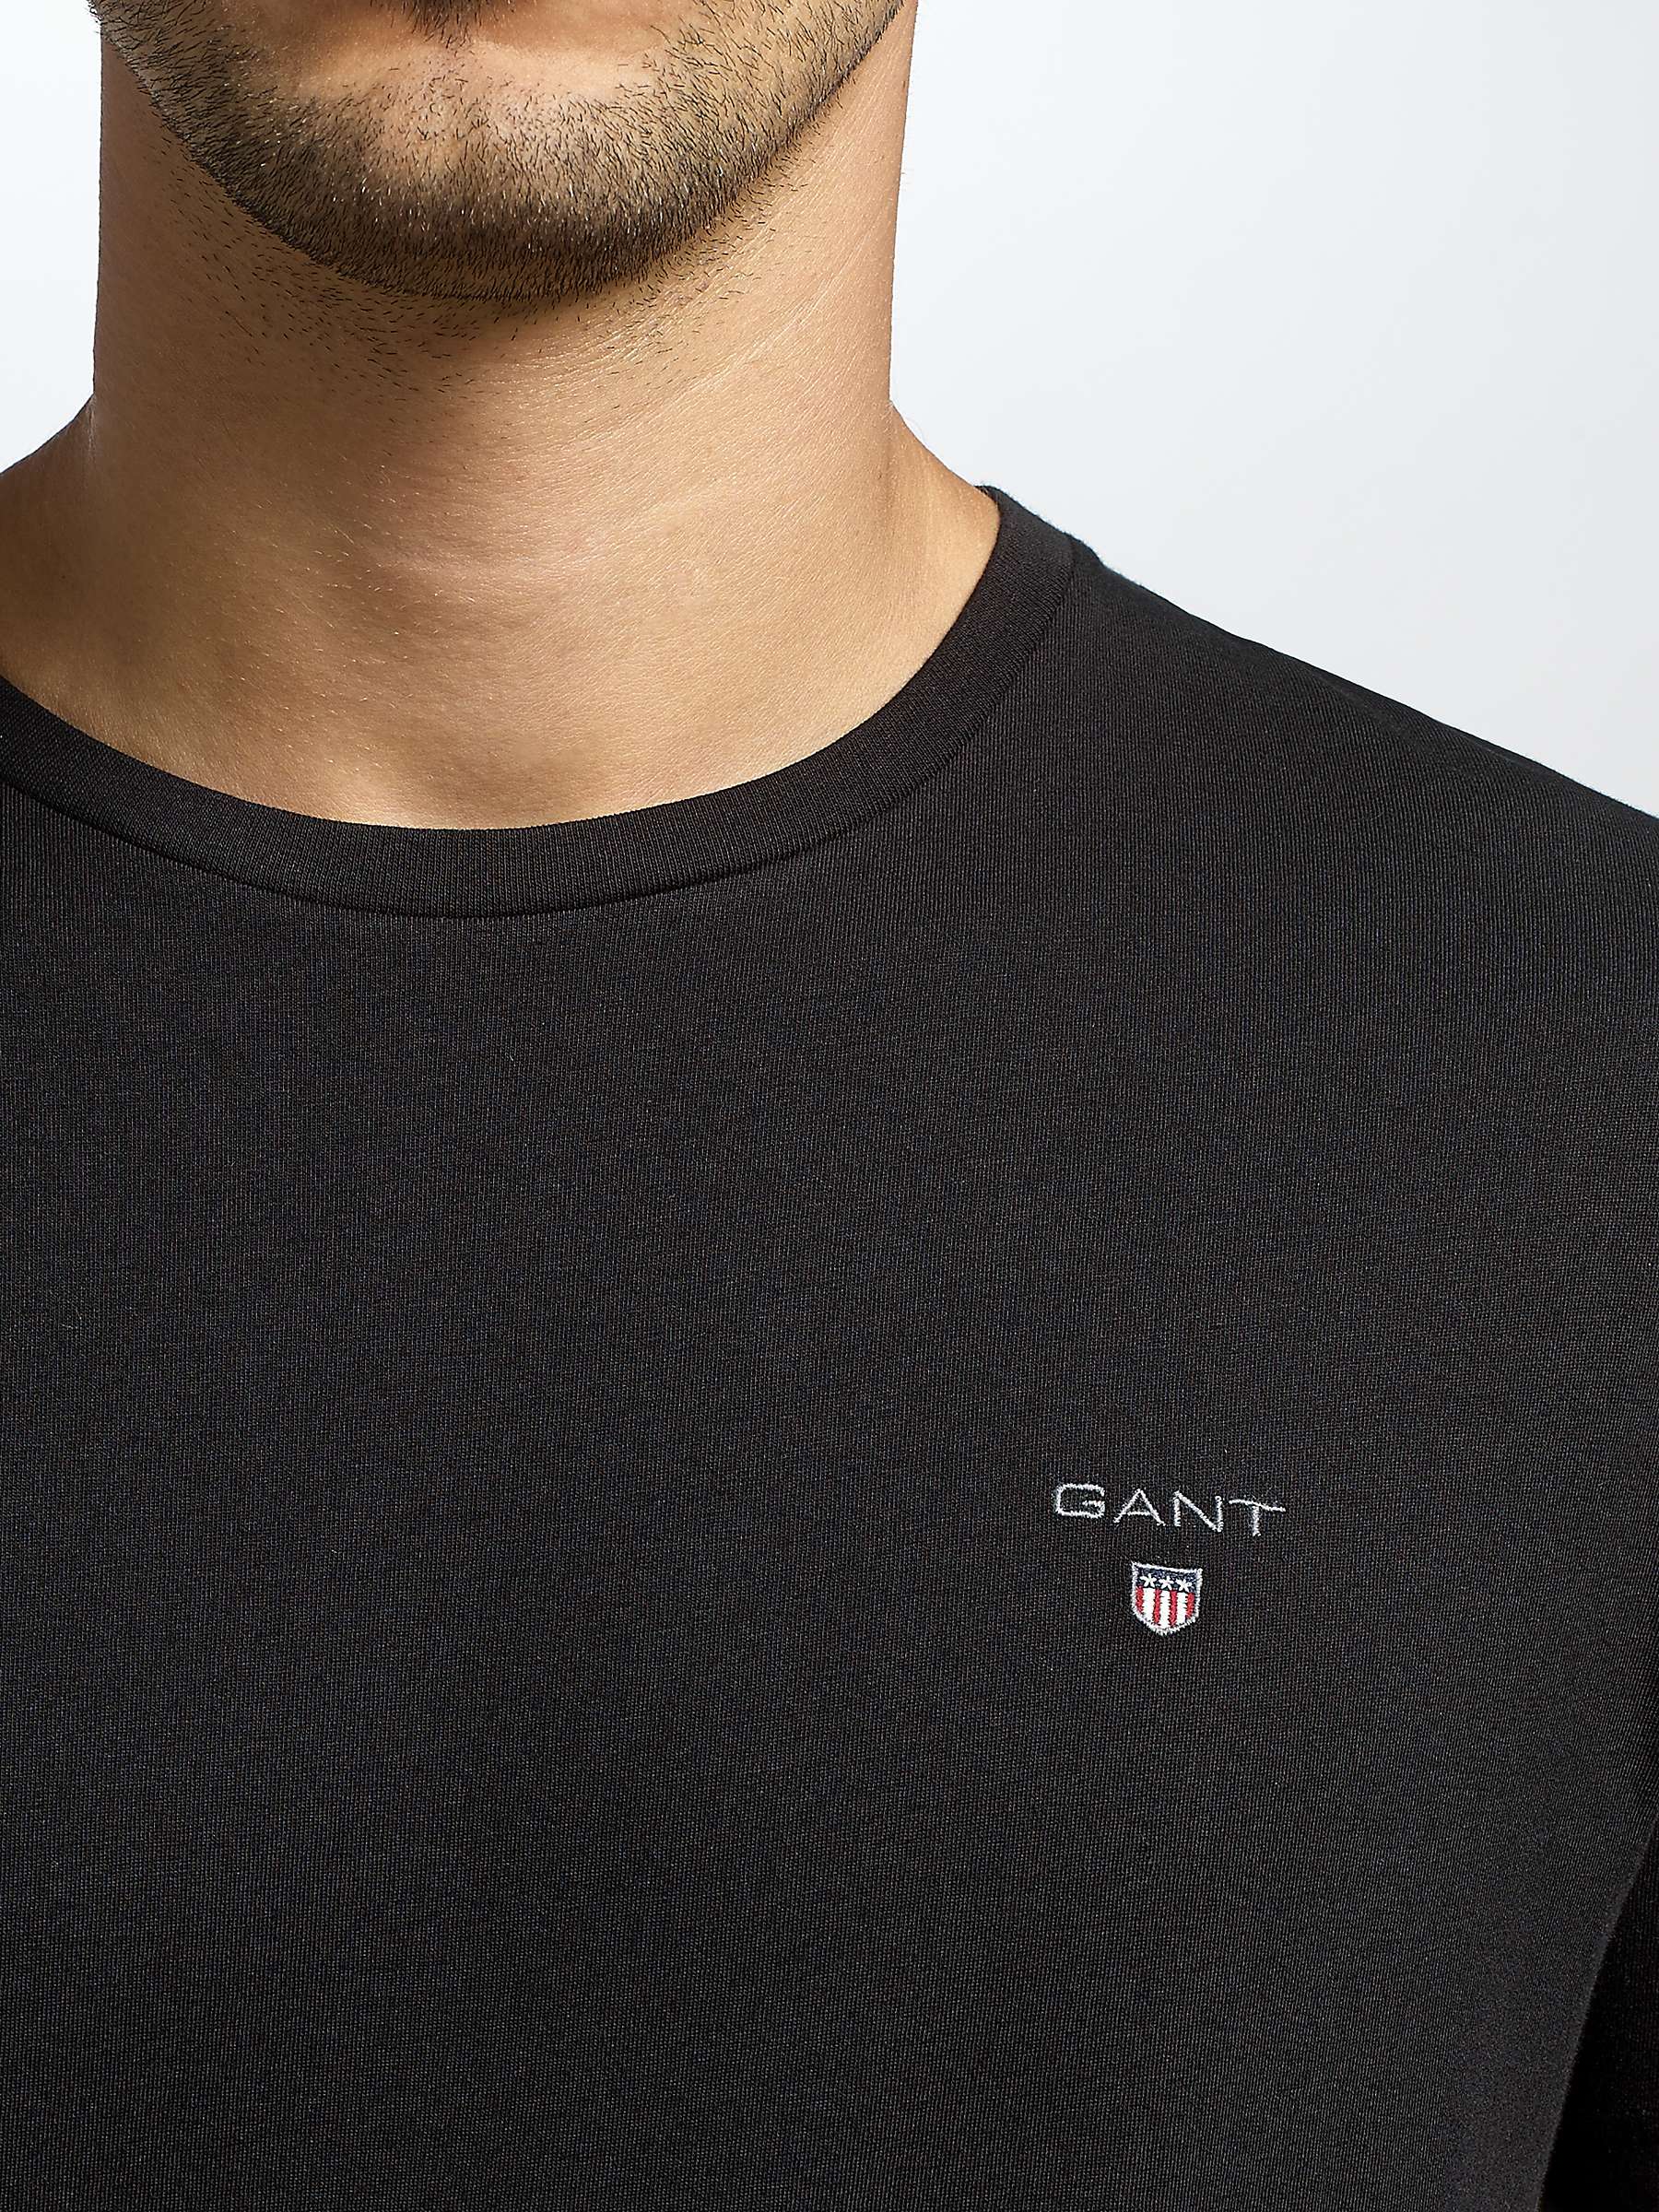 Buy GANT Cotton Crew Neck T-Shirt Online at johnlewis.com